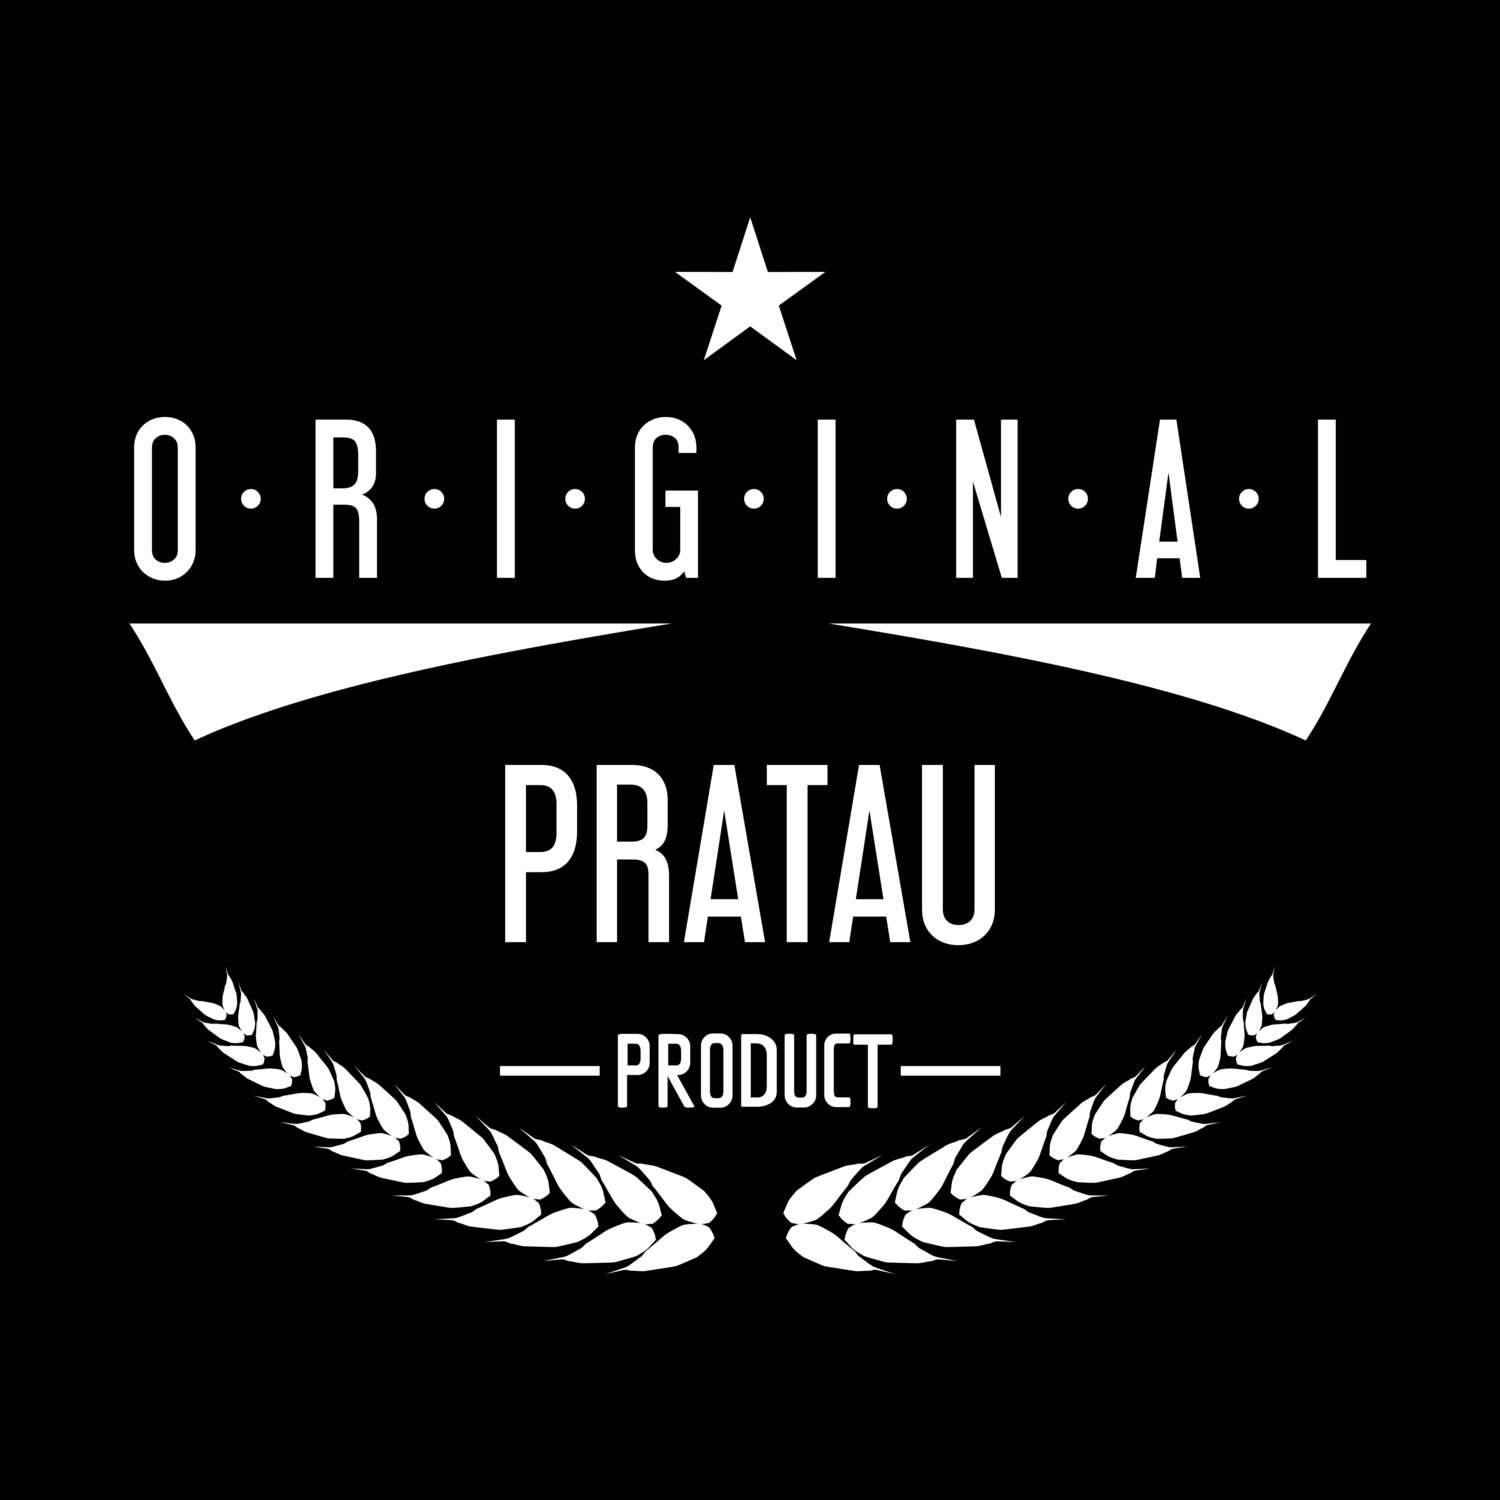 Pratau T-Shirt »Original Product«